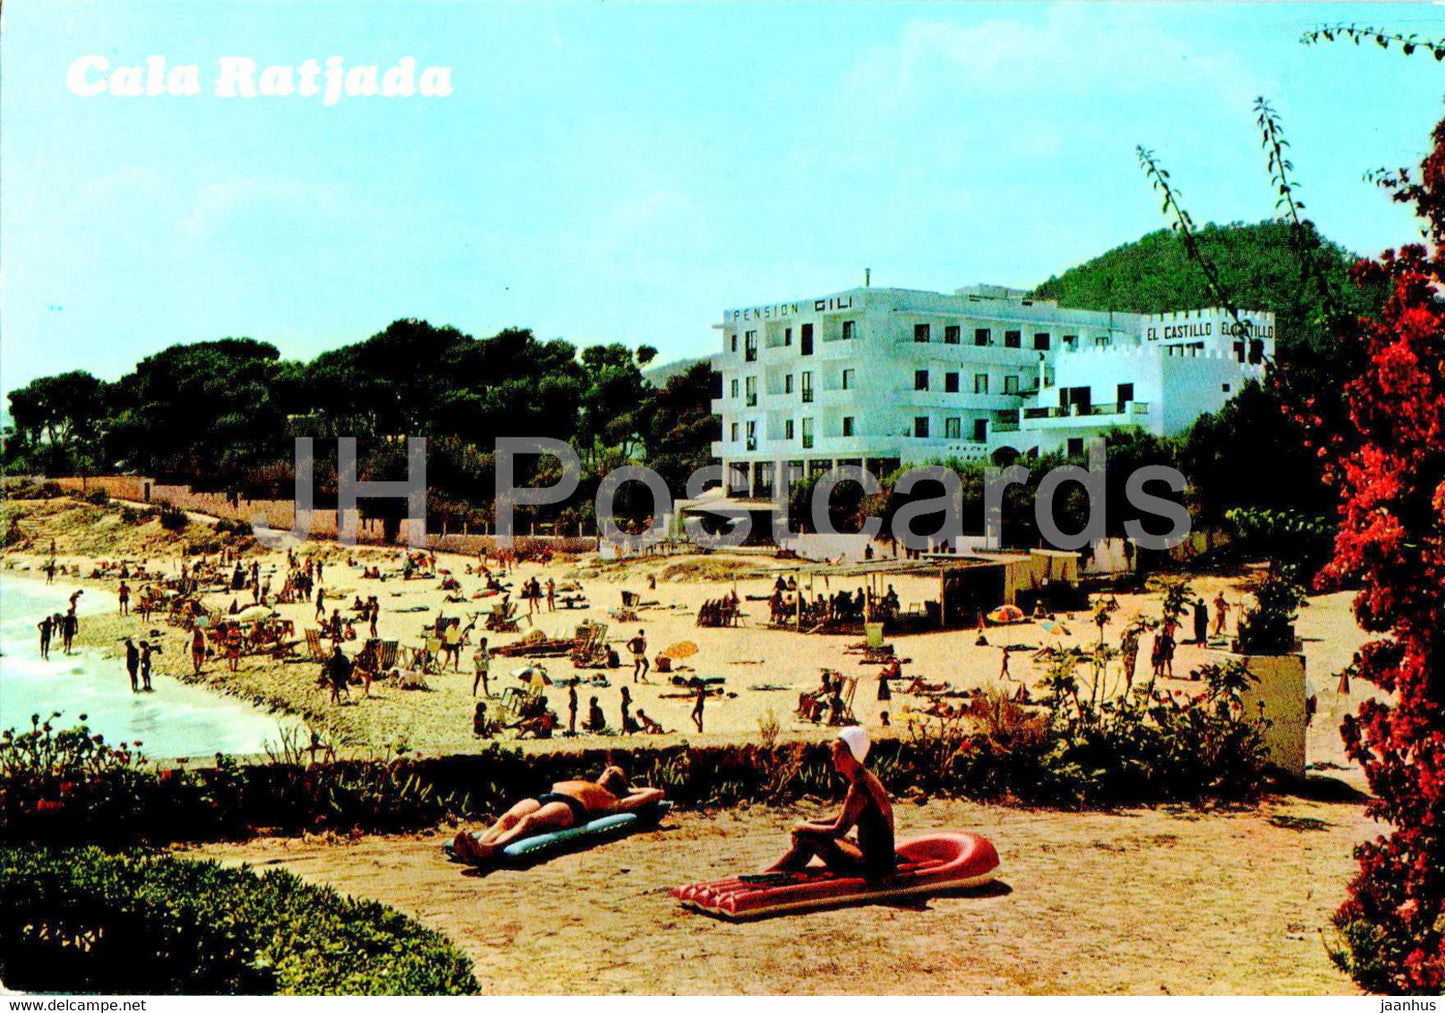 Cala Ratjada - Playa de Son Moll - beach - Mallorca - 2122 - Spain - unused - JH Postcards